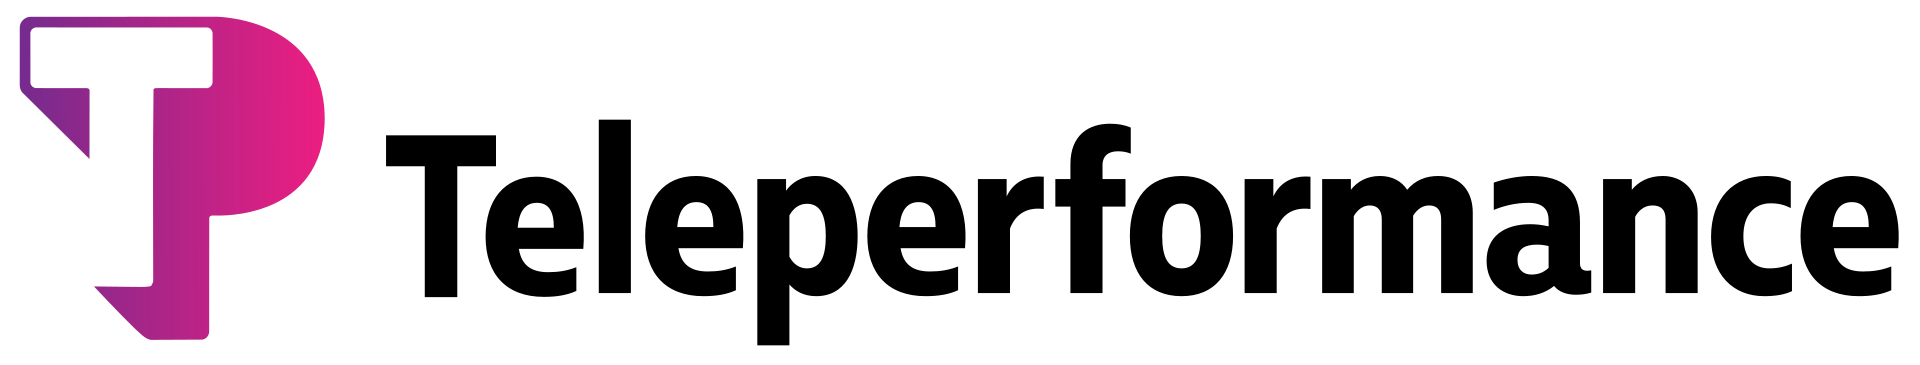 Teleperformance Brand Logo